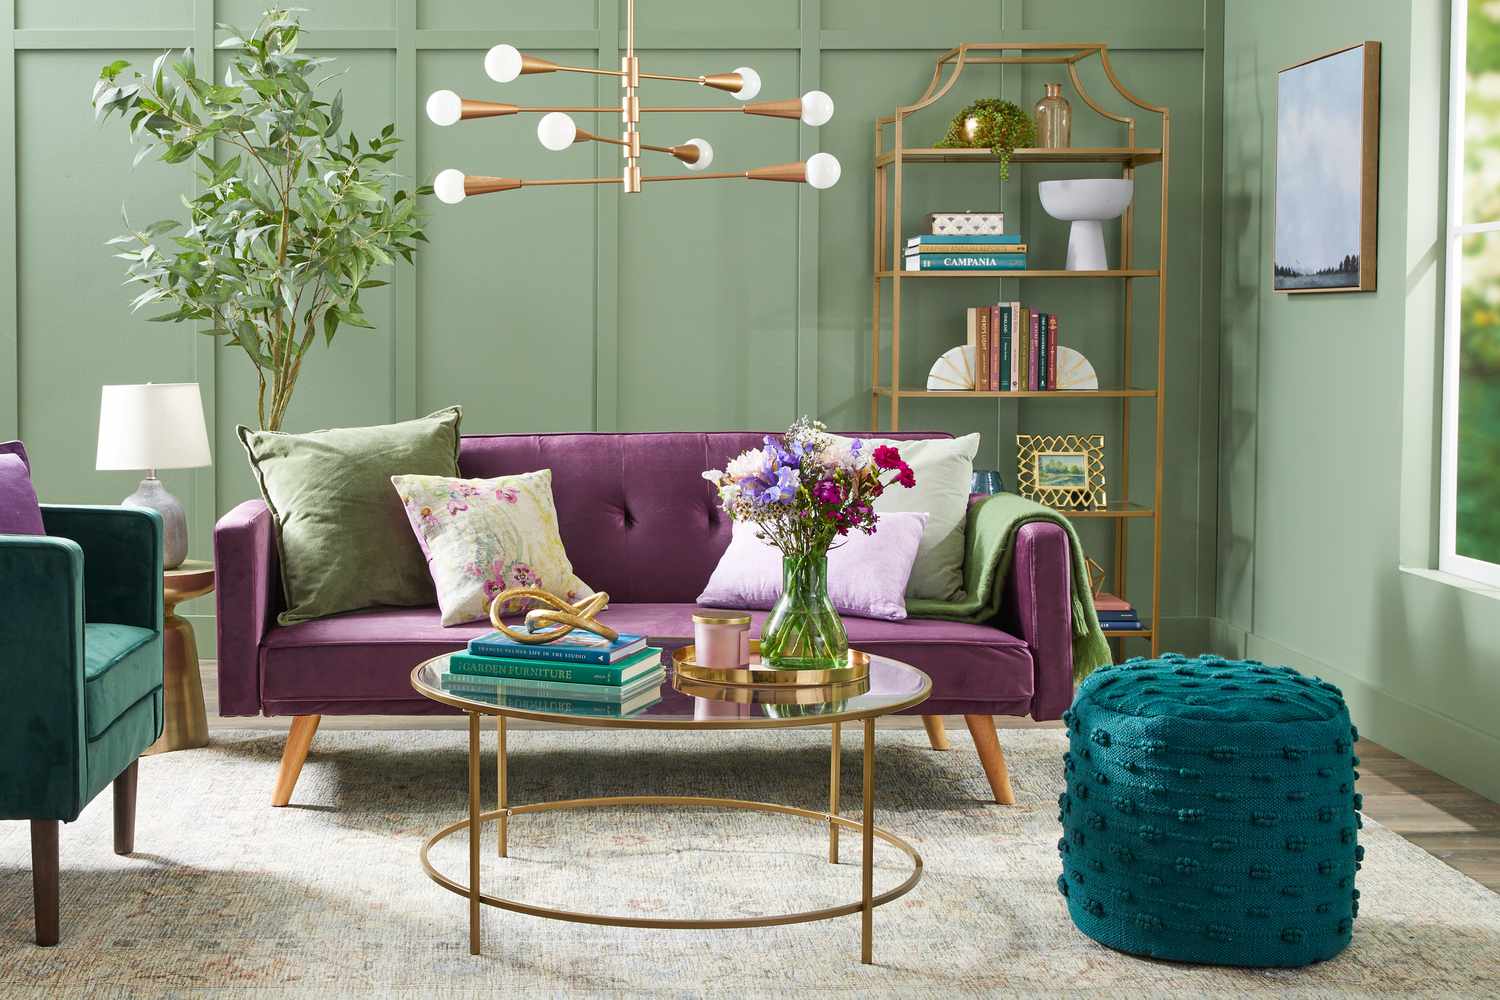 Mintgrünes Zimmer mit lilafarbenem Sofa und tealfarbenem Pouf